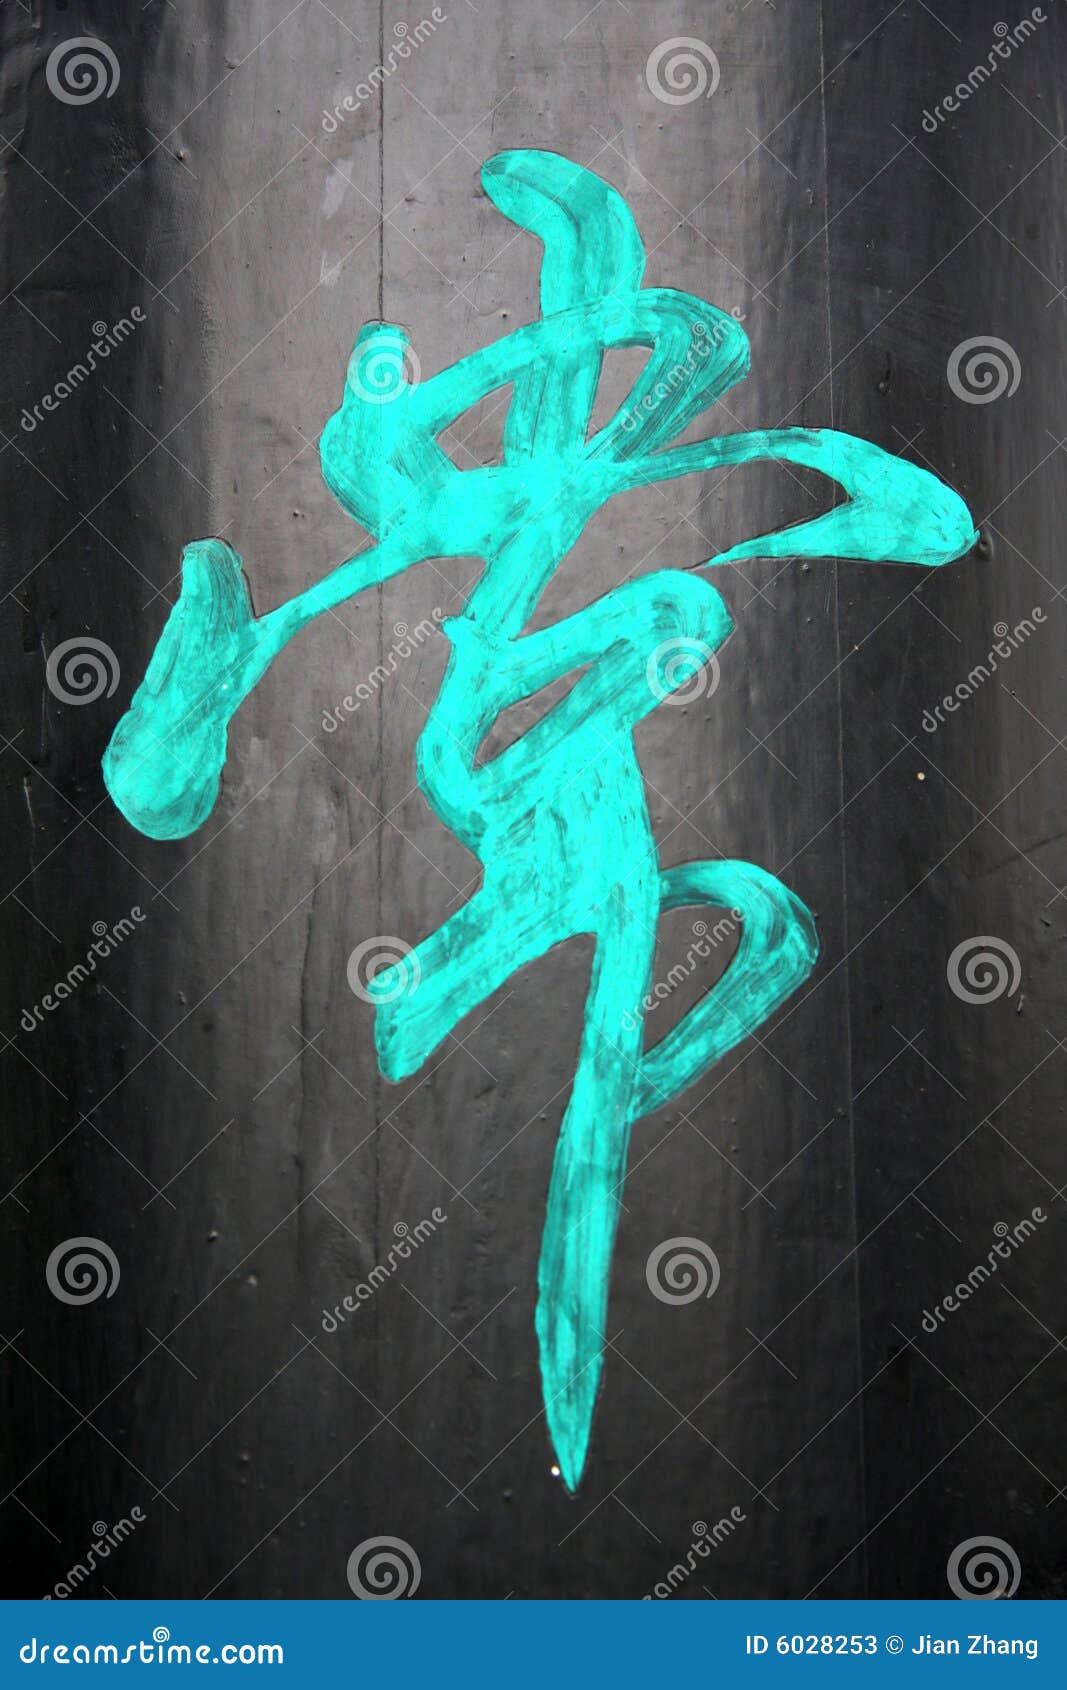 Chinese character stock image. Image of china, writing - 6028253